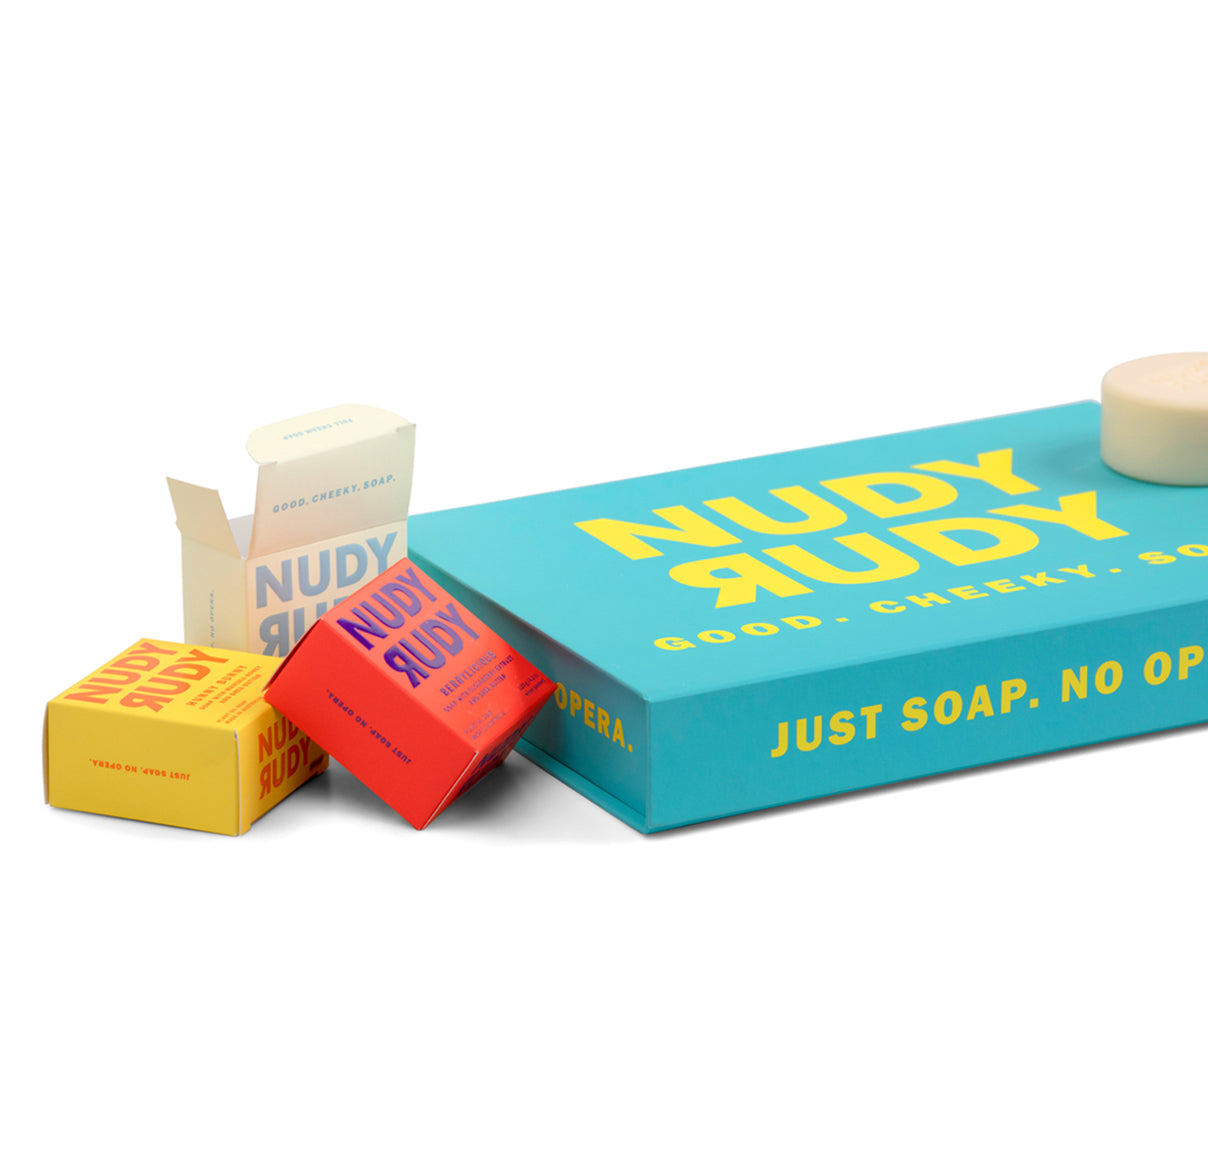 The Box – Nudy Rudy US